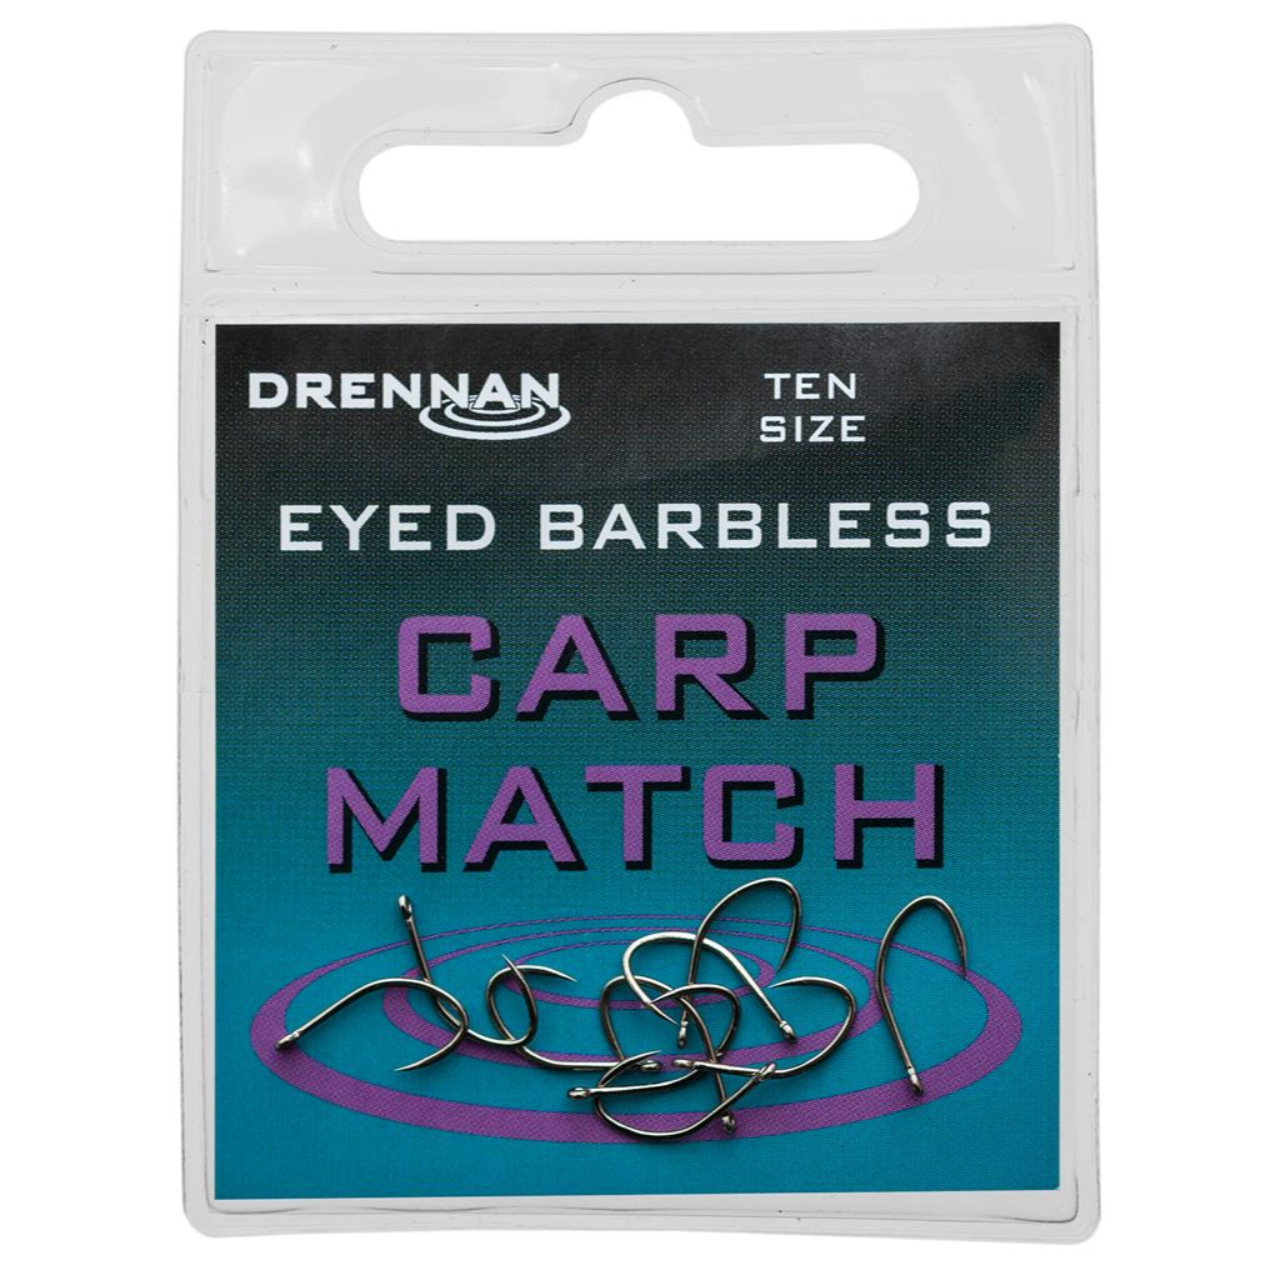 Drennan Eyed B'less Carp Match HEBMA008.jpg